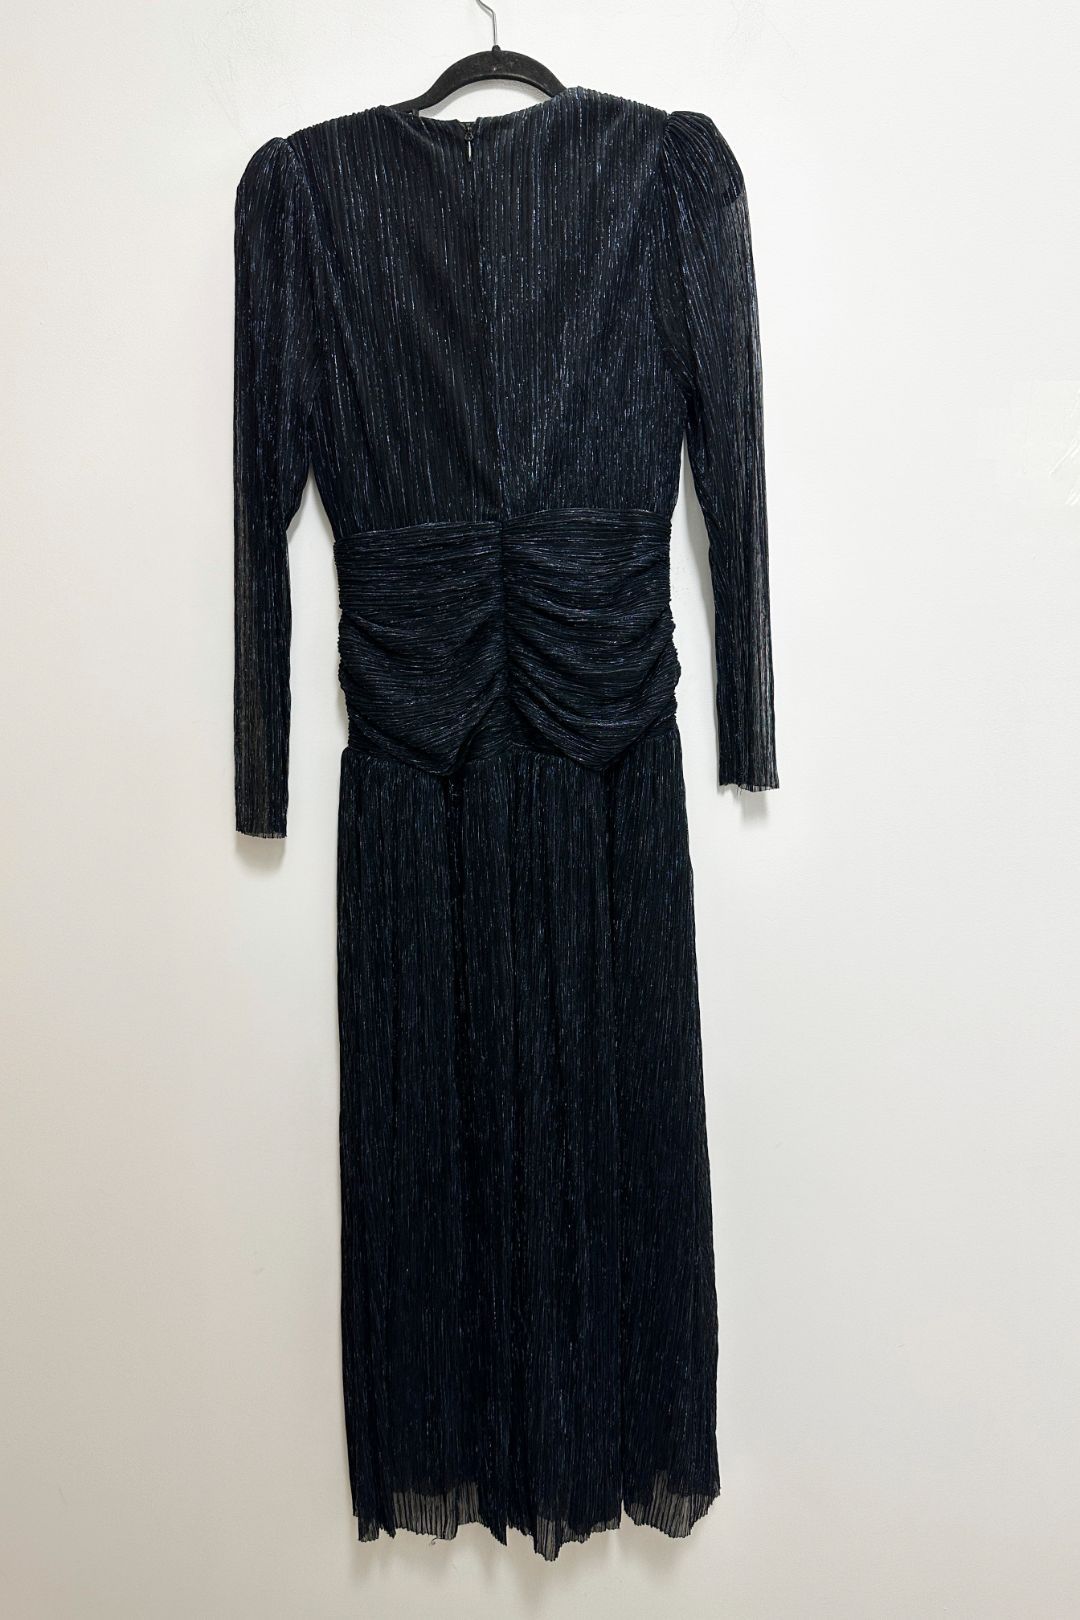 Sheike Metallic Finish Billionaire Dress in Black